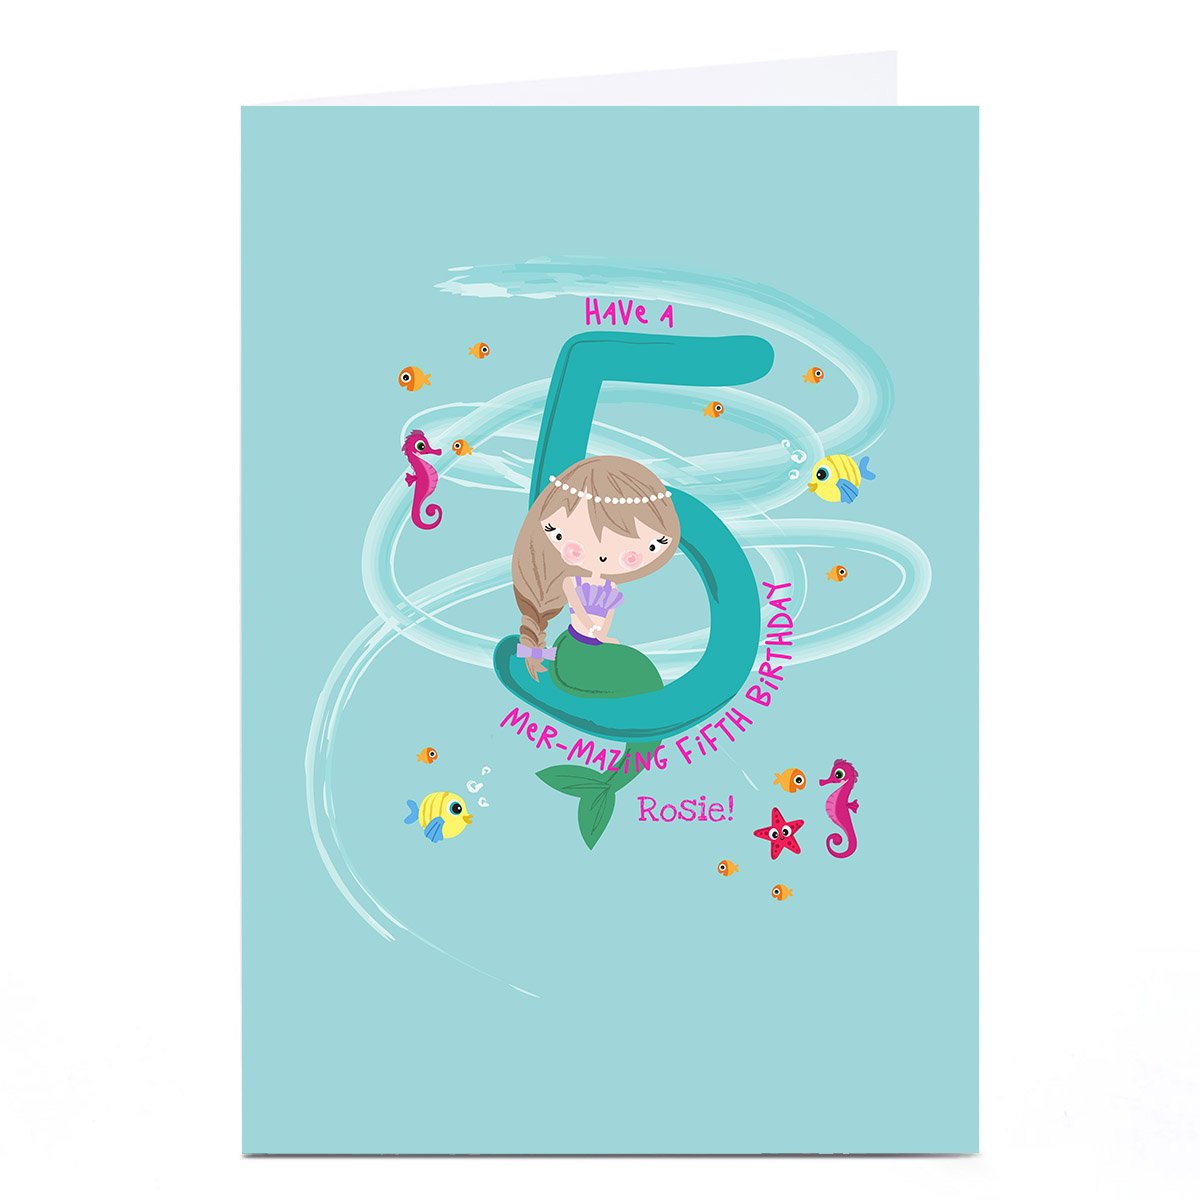 Personalised Rachel Griffin Birthday Card - 5, Mer-mazing Birthday 